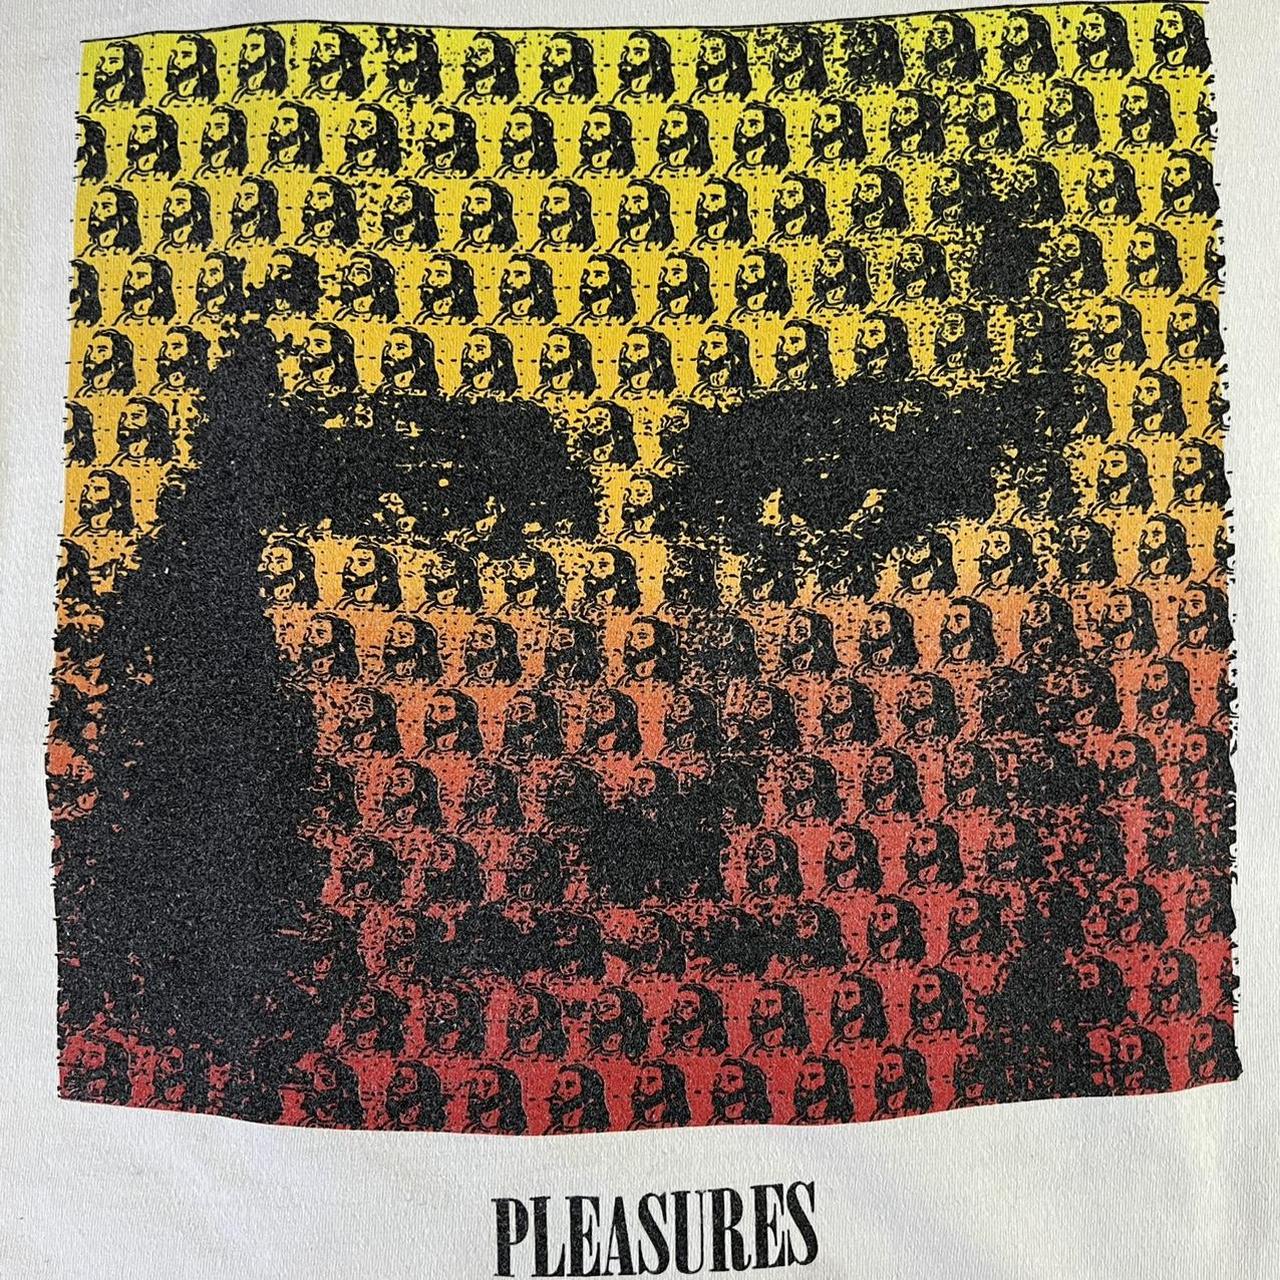 Pleasures Men's White T-shirt (3)